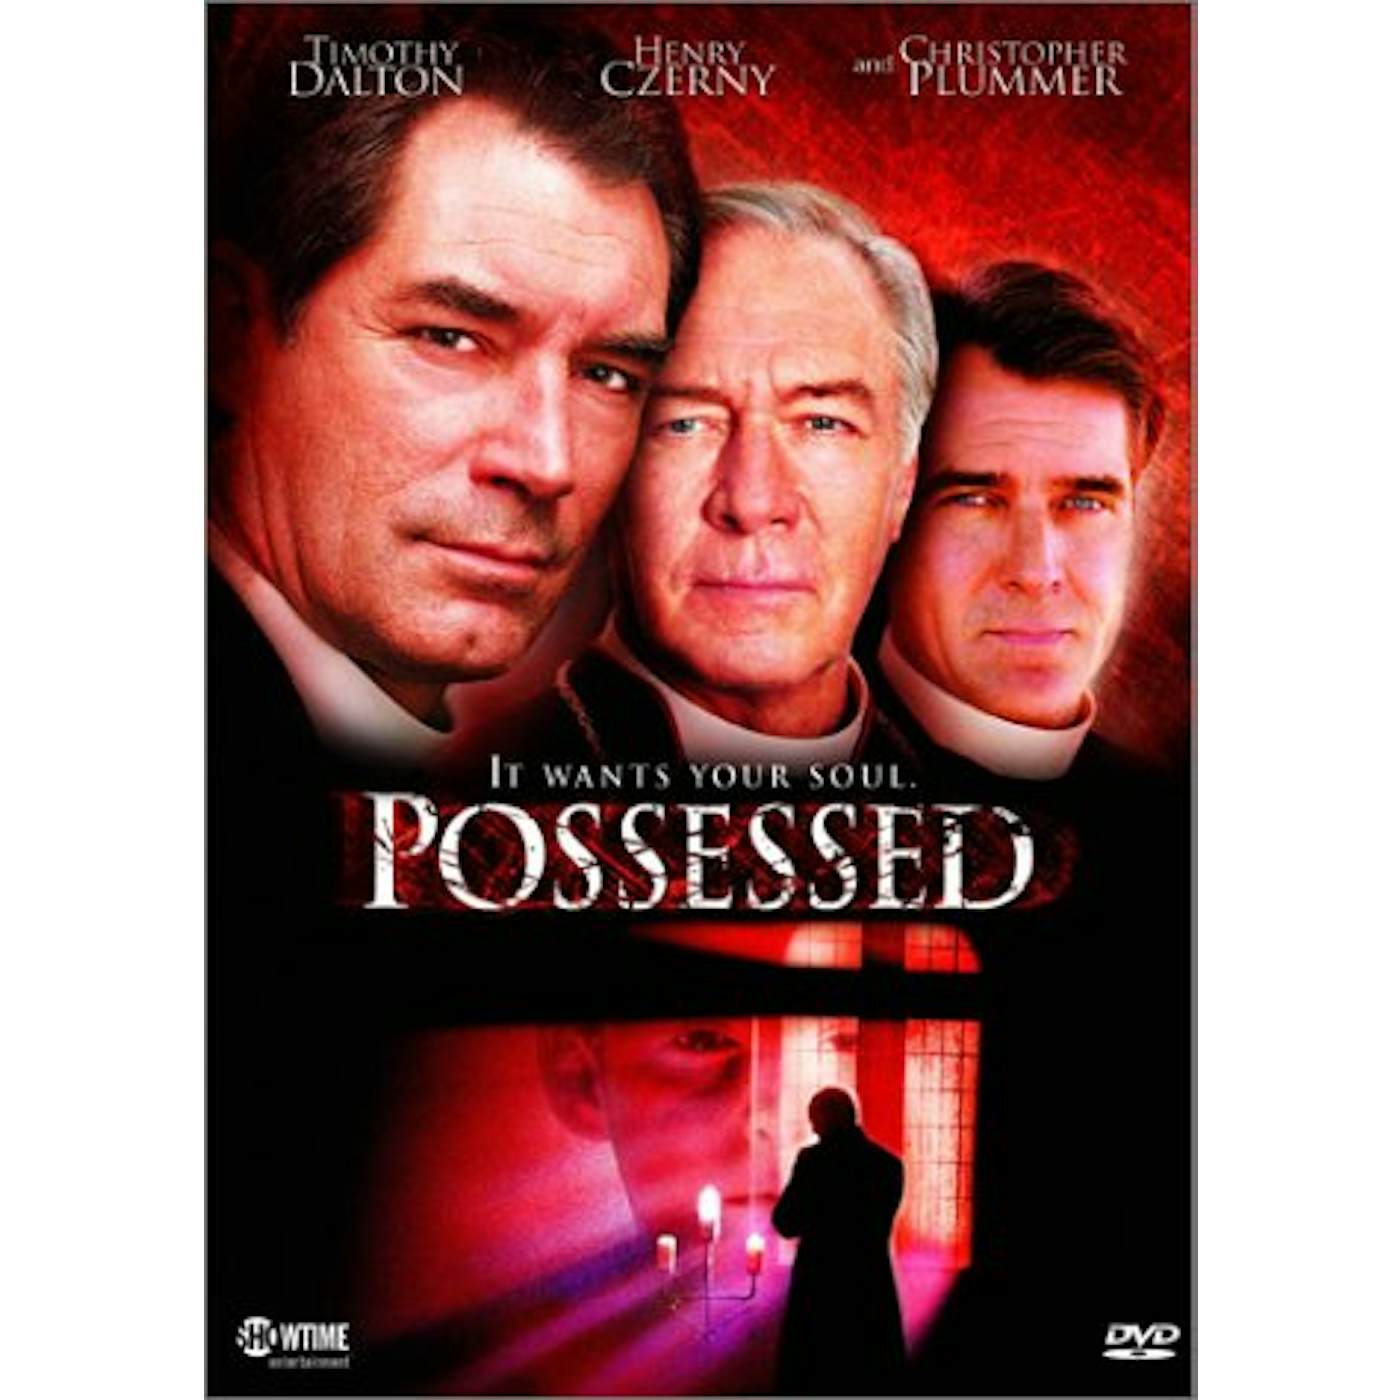 POSSESSED (2000) DVD